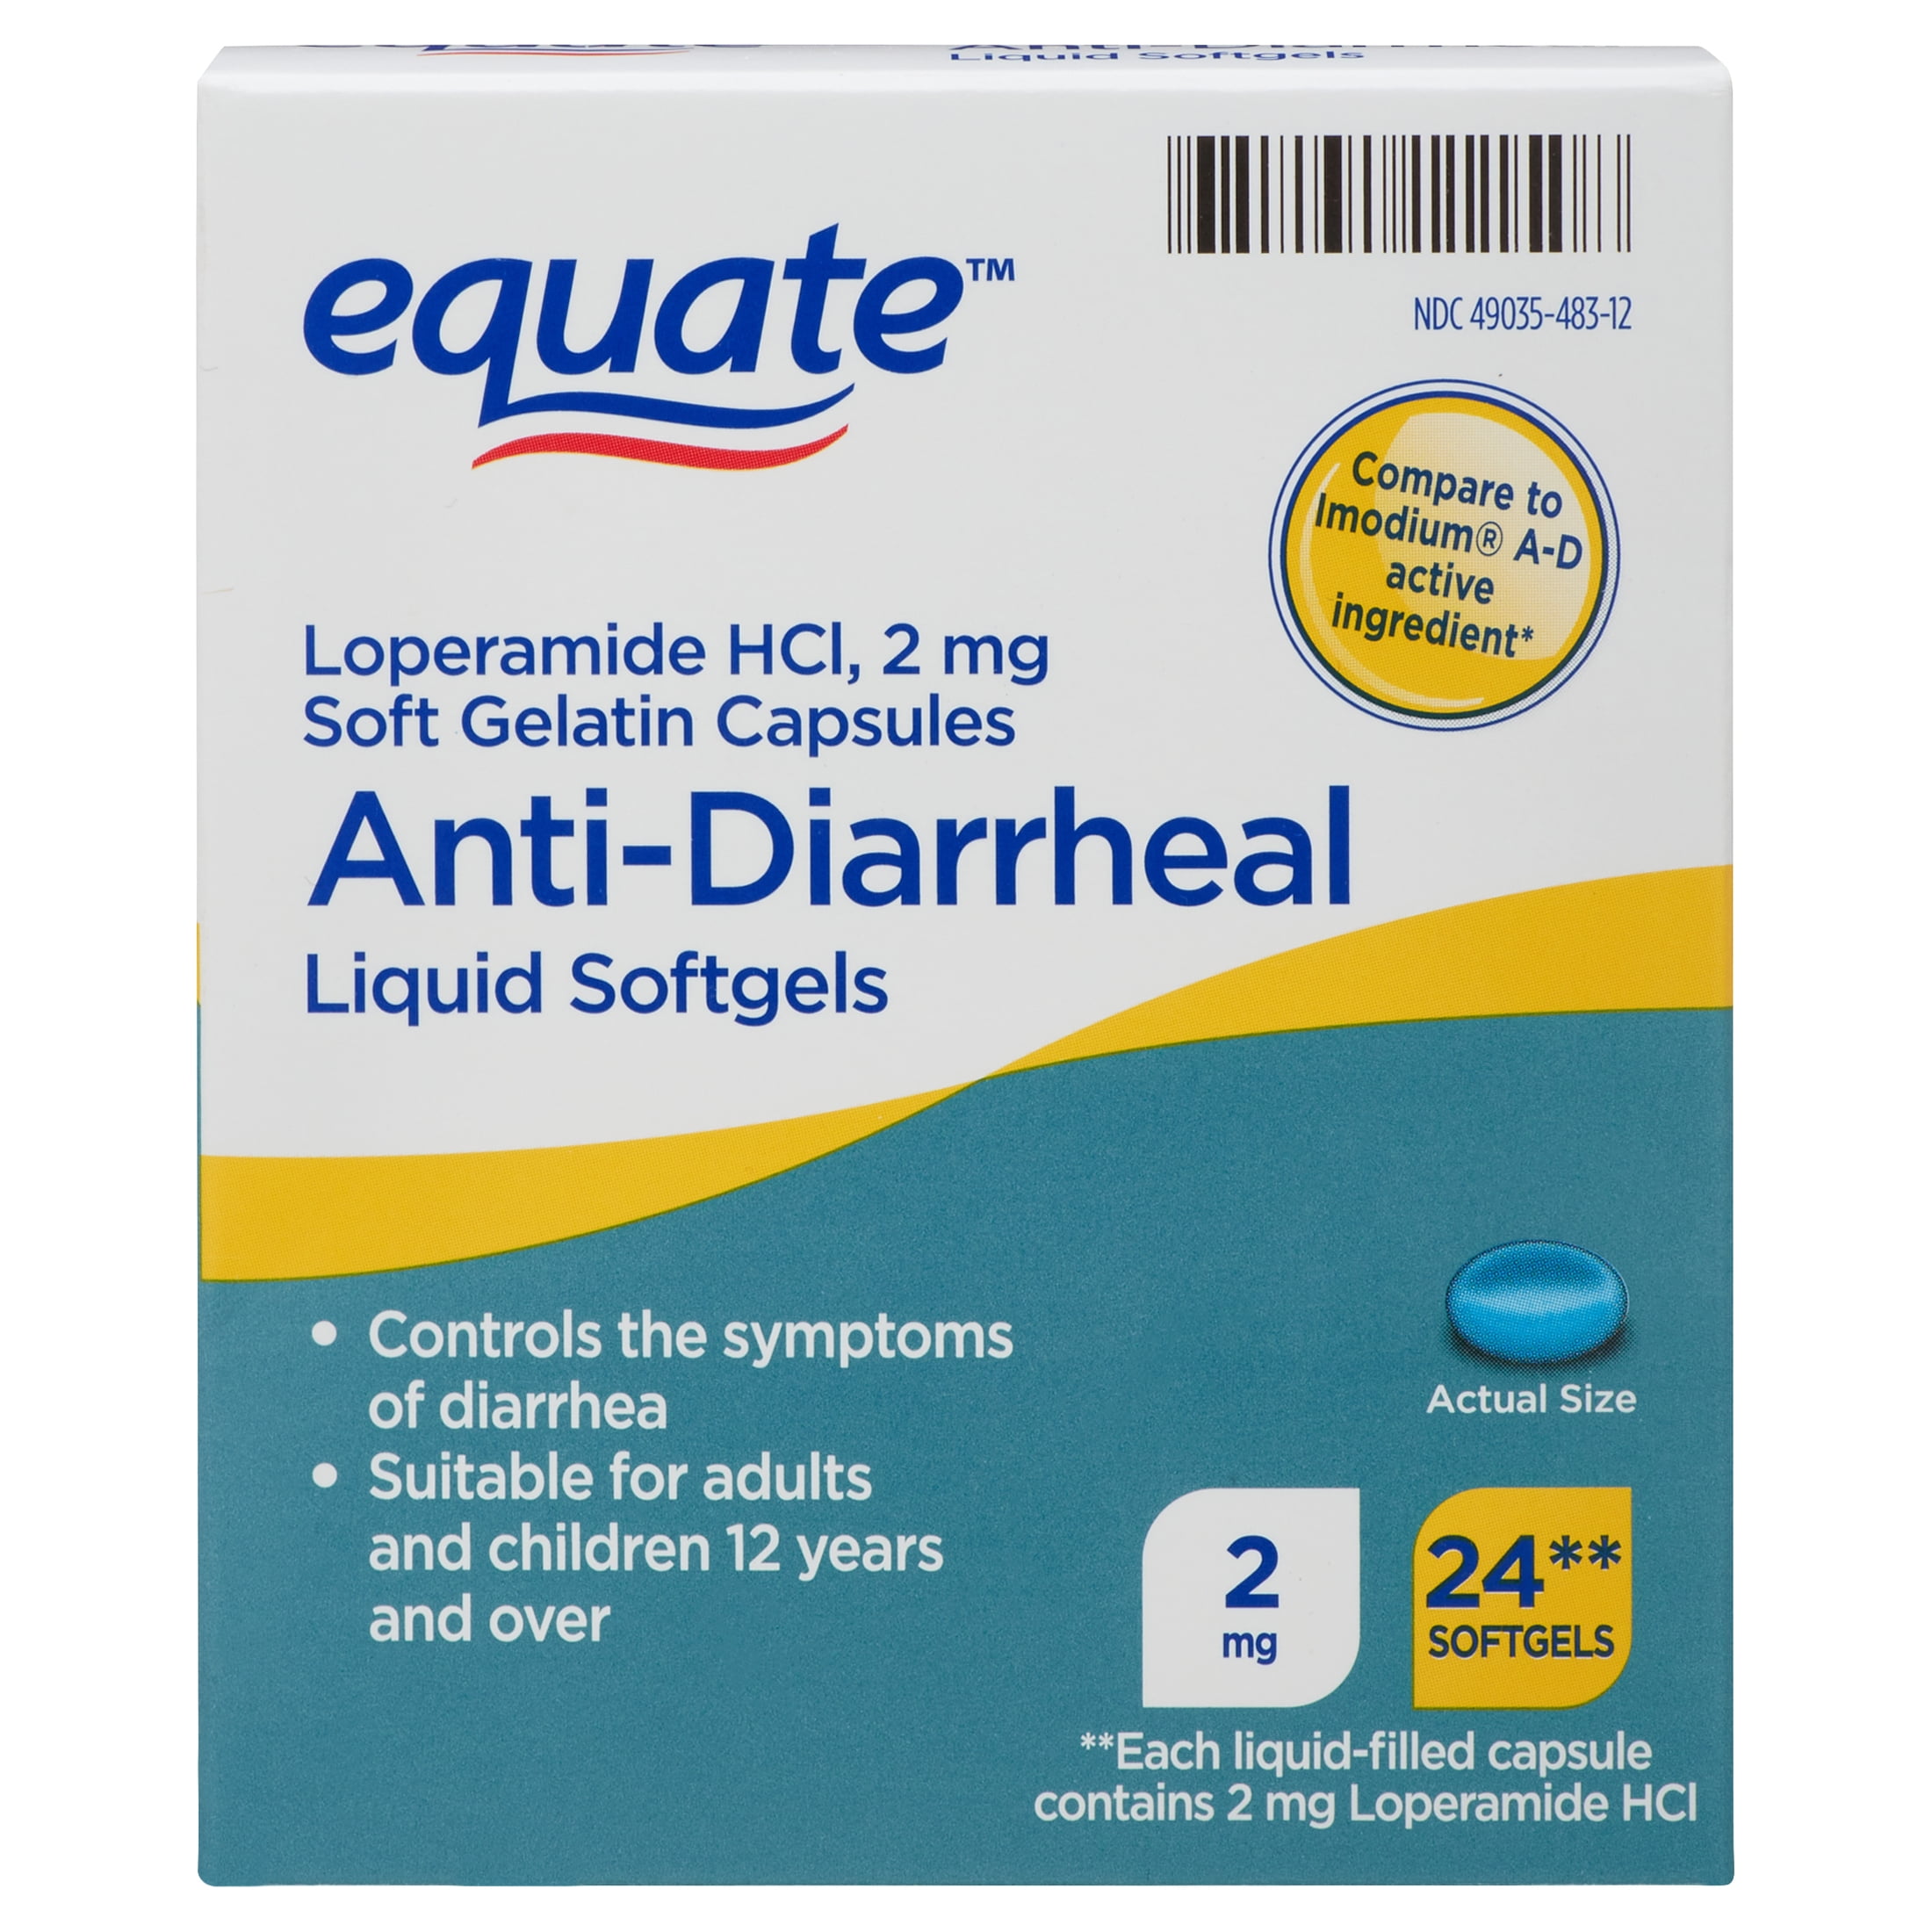 Equate Loperamide HCl Anti-Diarrheal Liquid Softgels, 2 mg, 24 Count